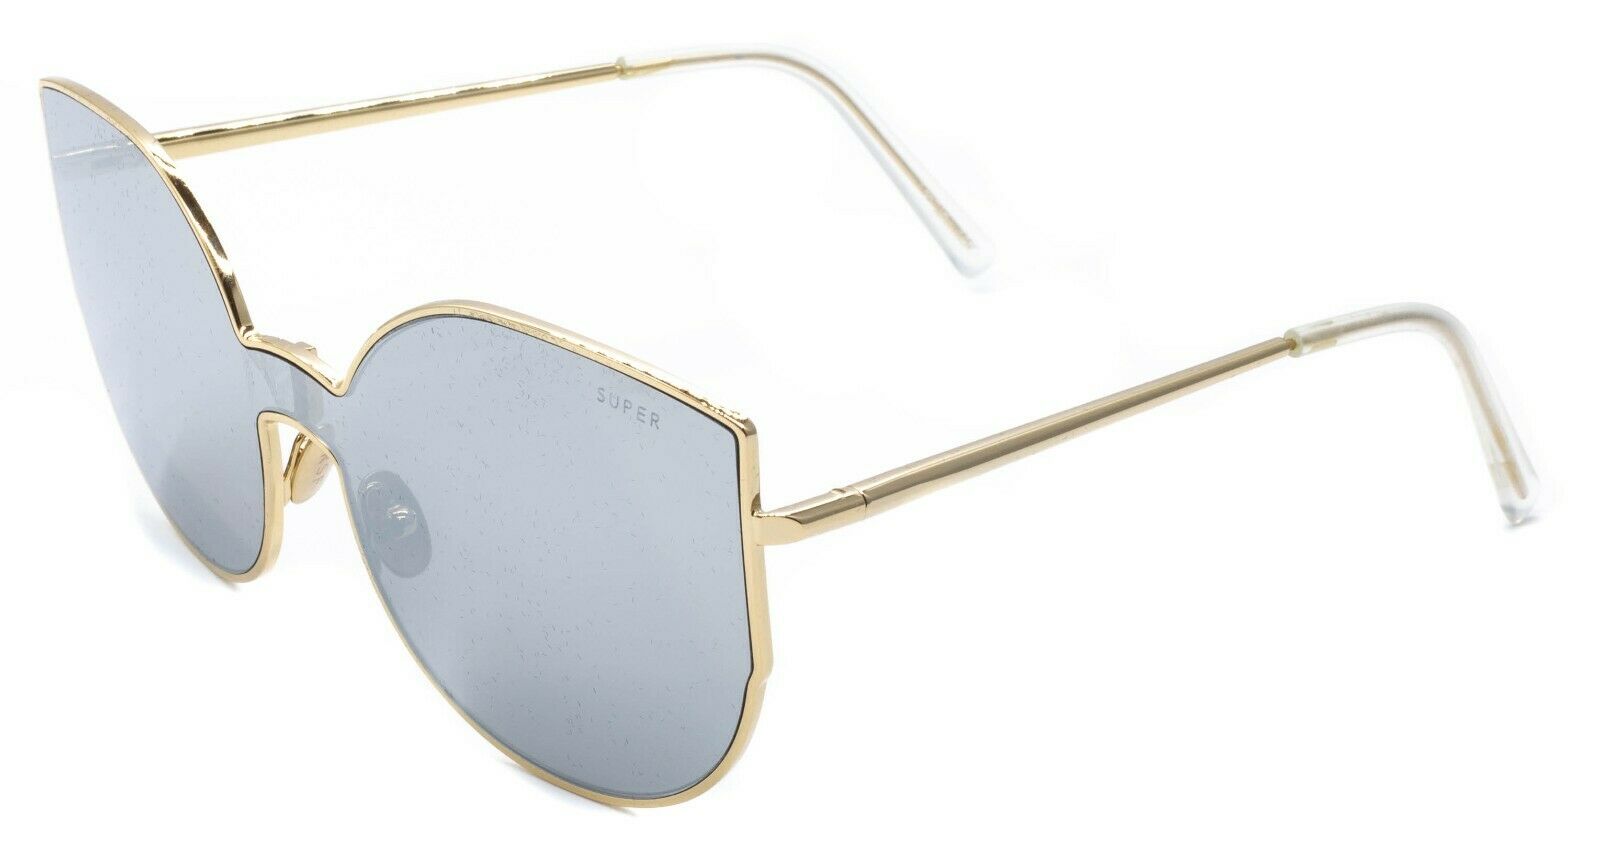 RETROSUPERFUTURE LENZ LUCIA SILVER J7C 56mm Sunglasses Eyewear Frames BNIB Italy